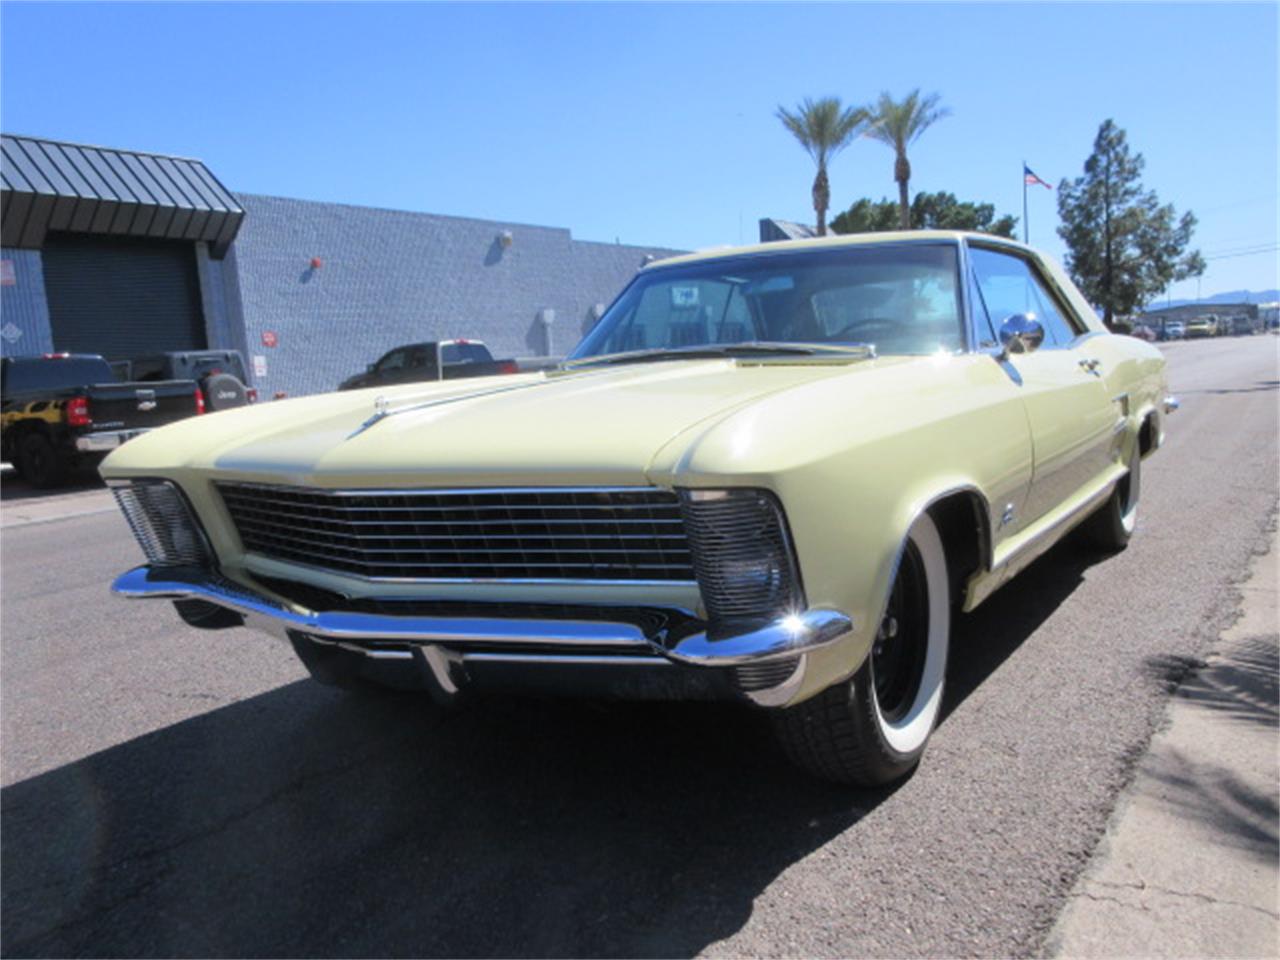 For Sale: 1964 Buick Riviera in Phoenix, Arizona for sale in Phoenix, AZ